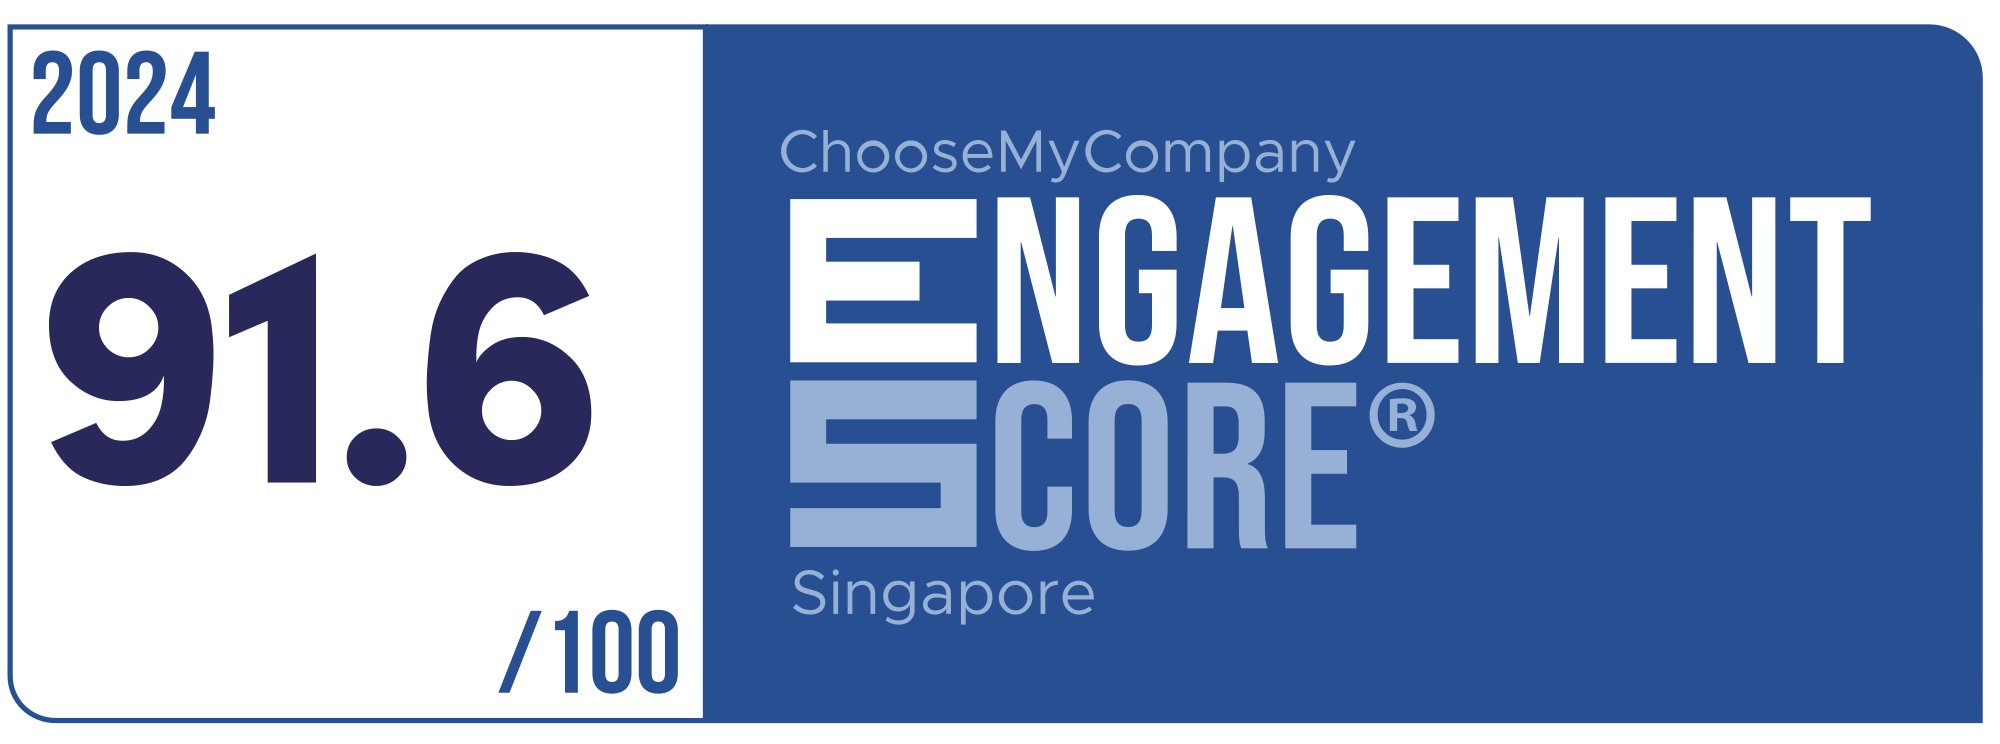 Label Engagement Score 2024 Singapore